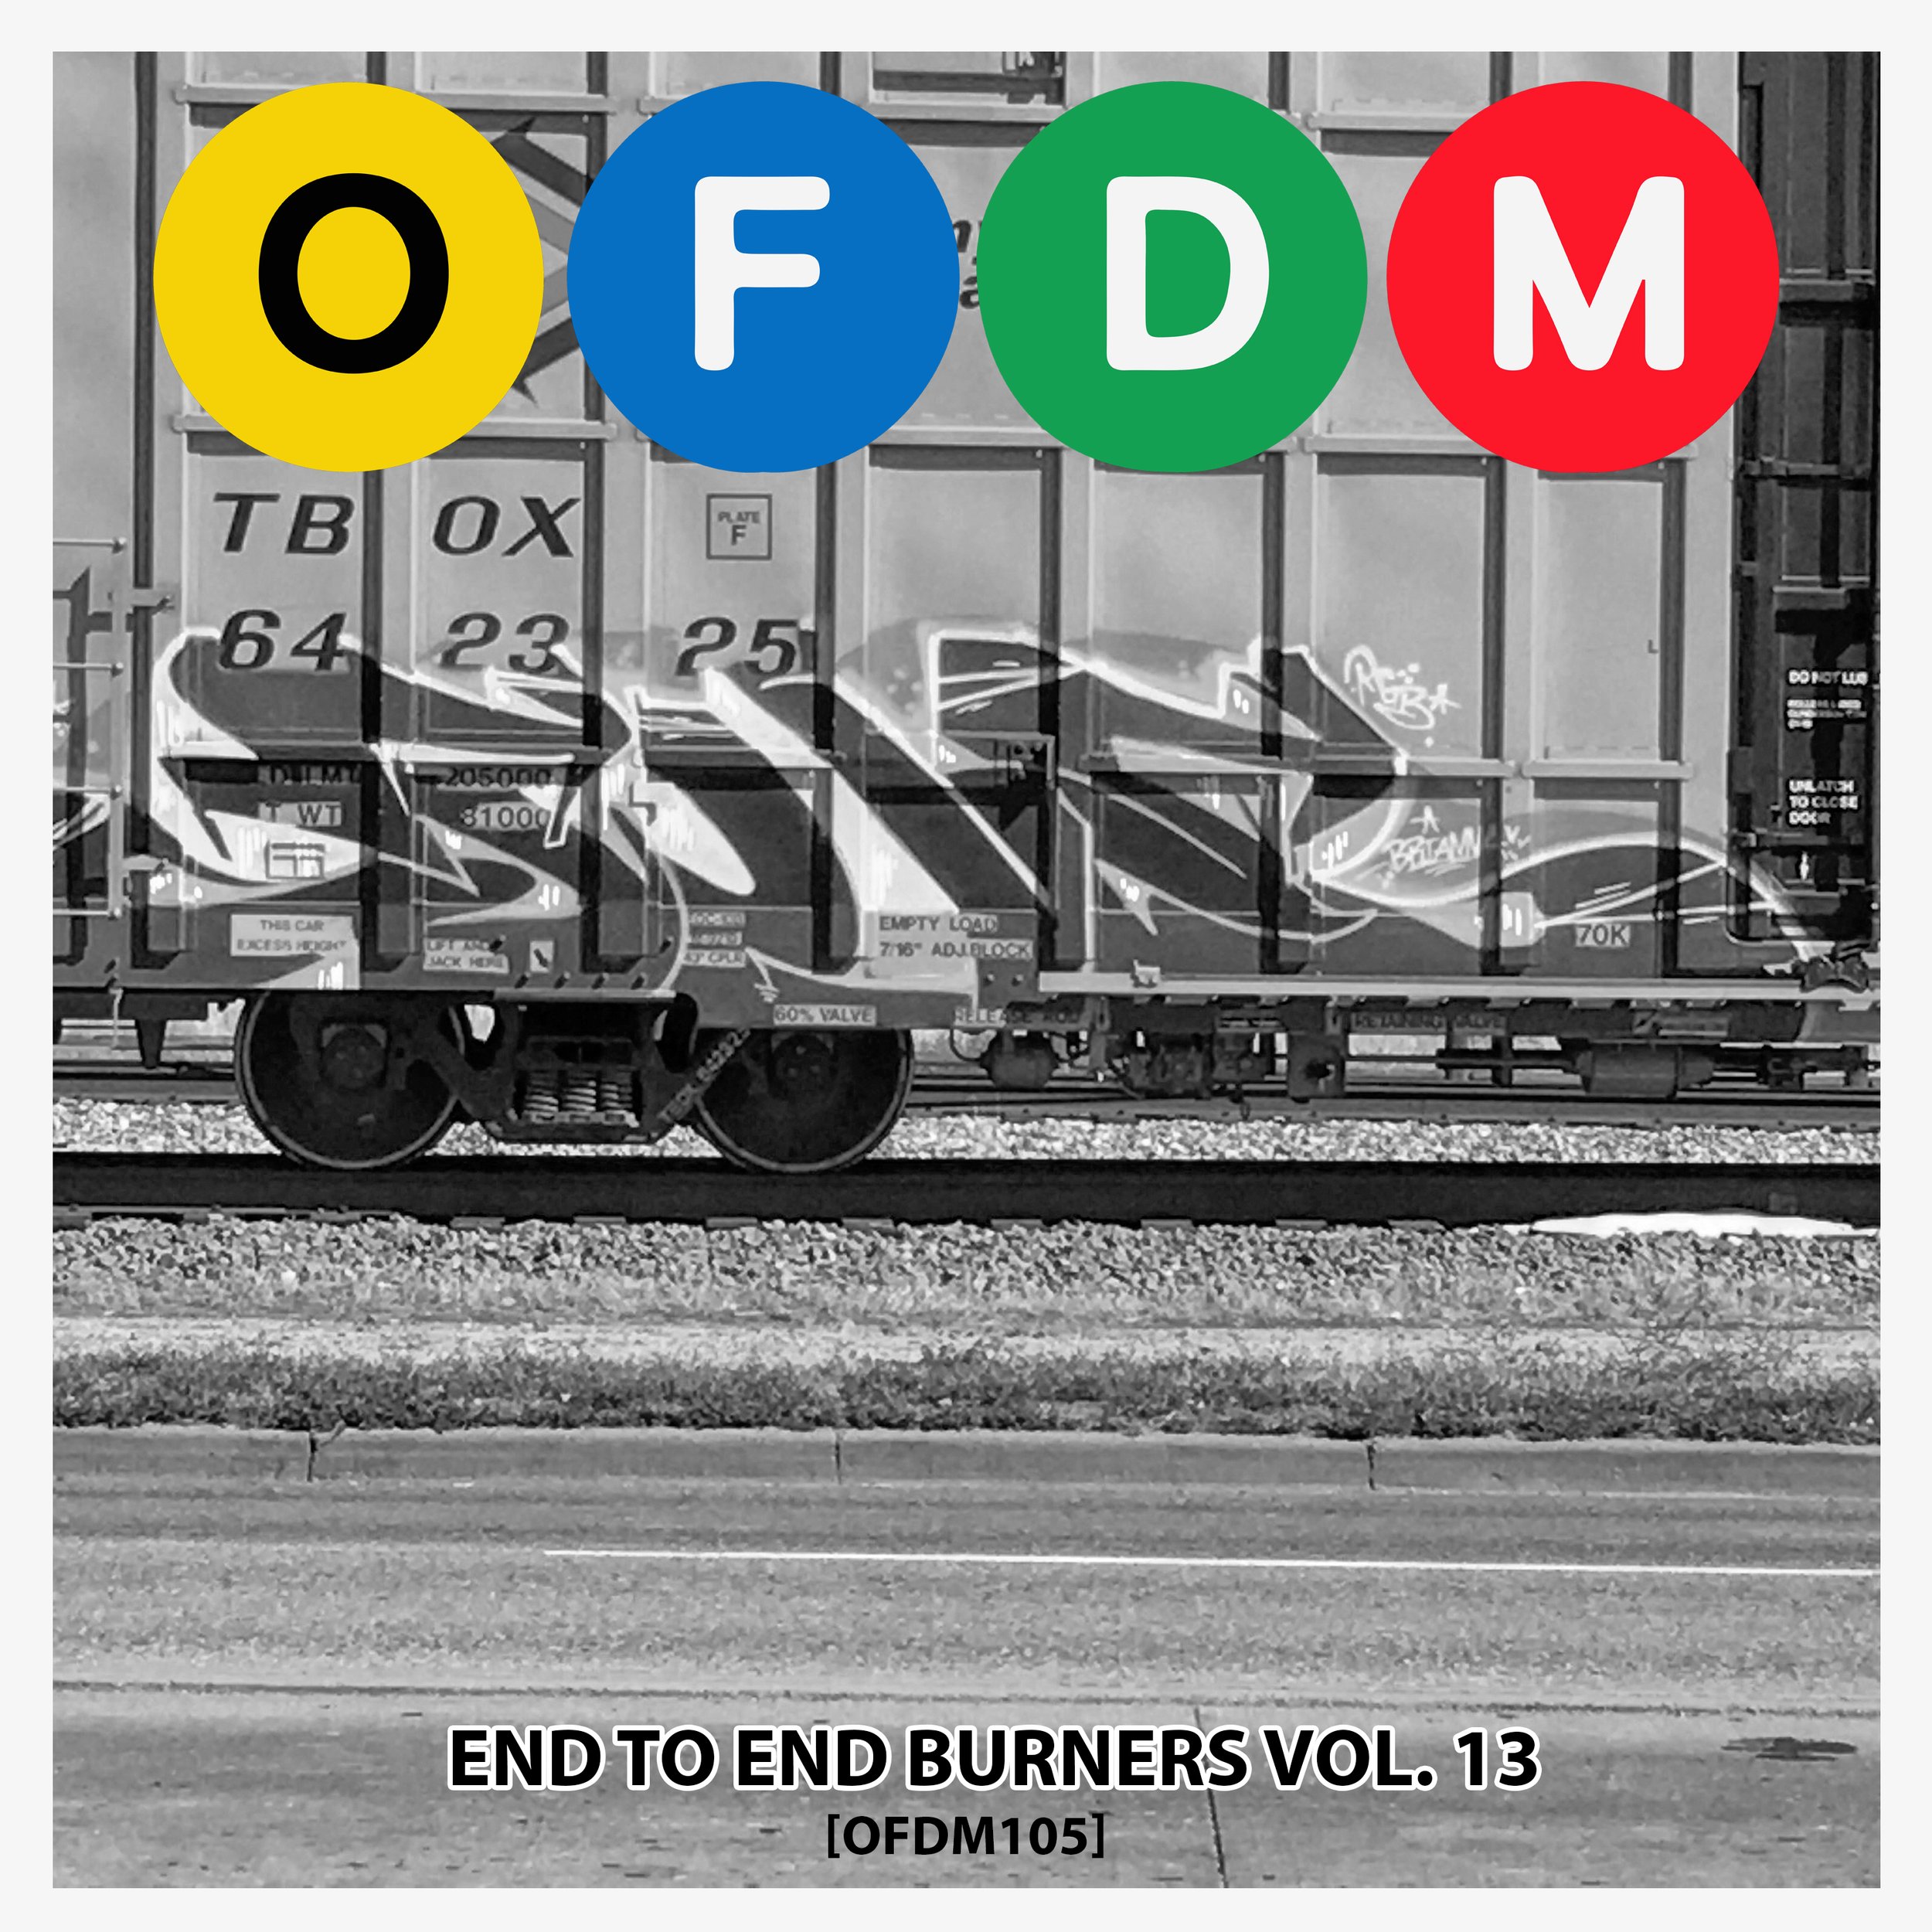 [OFDM105] VA - End To End Burners, Vol. 13 (ARTWORK).jpg